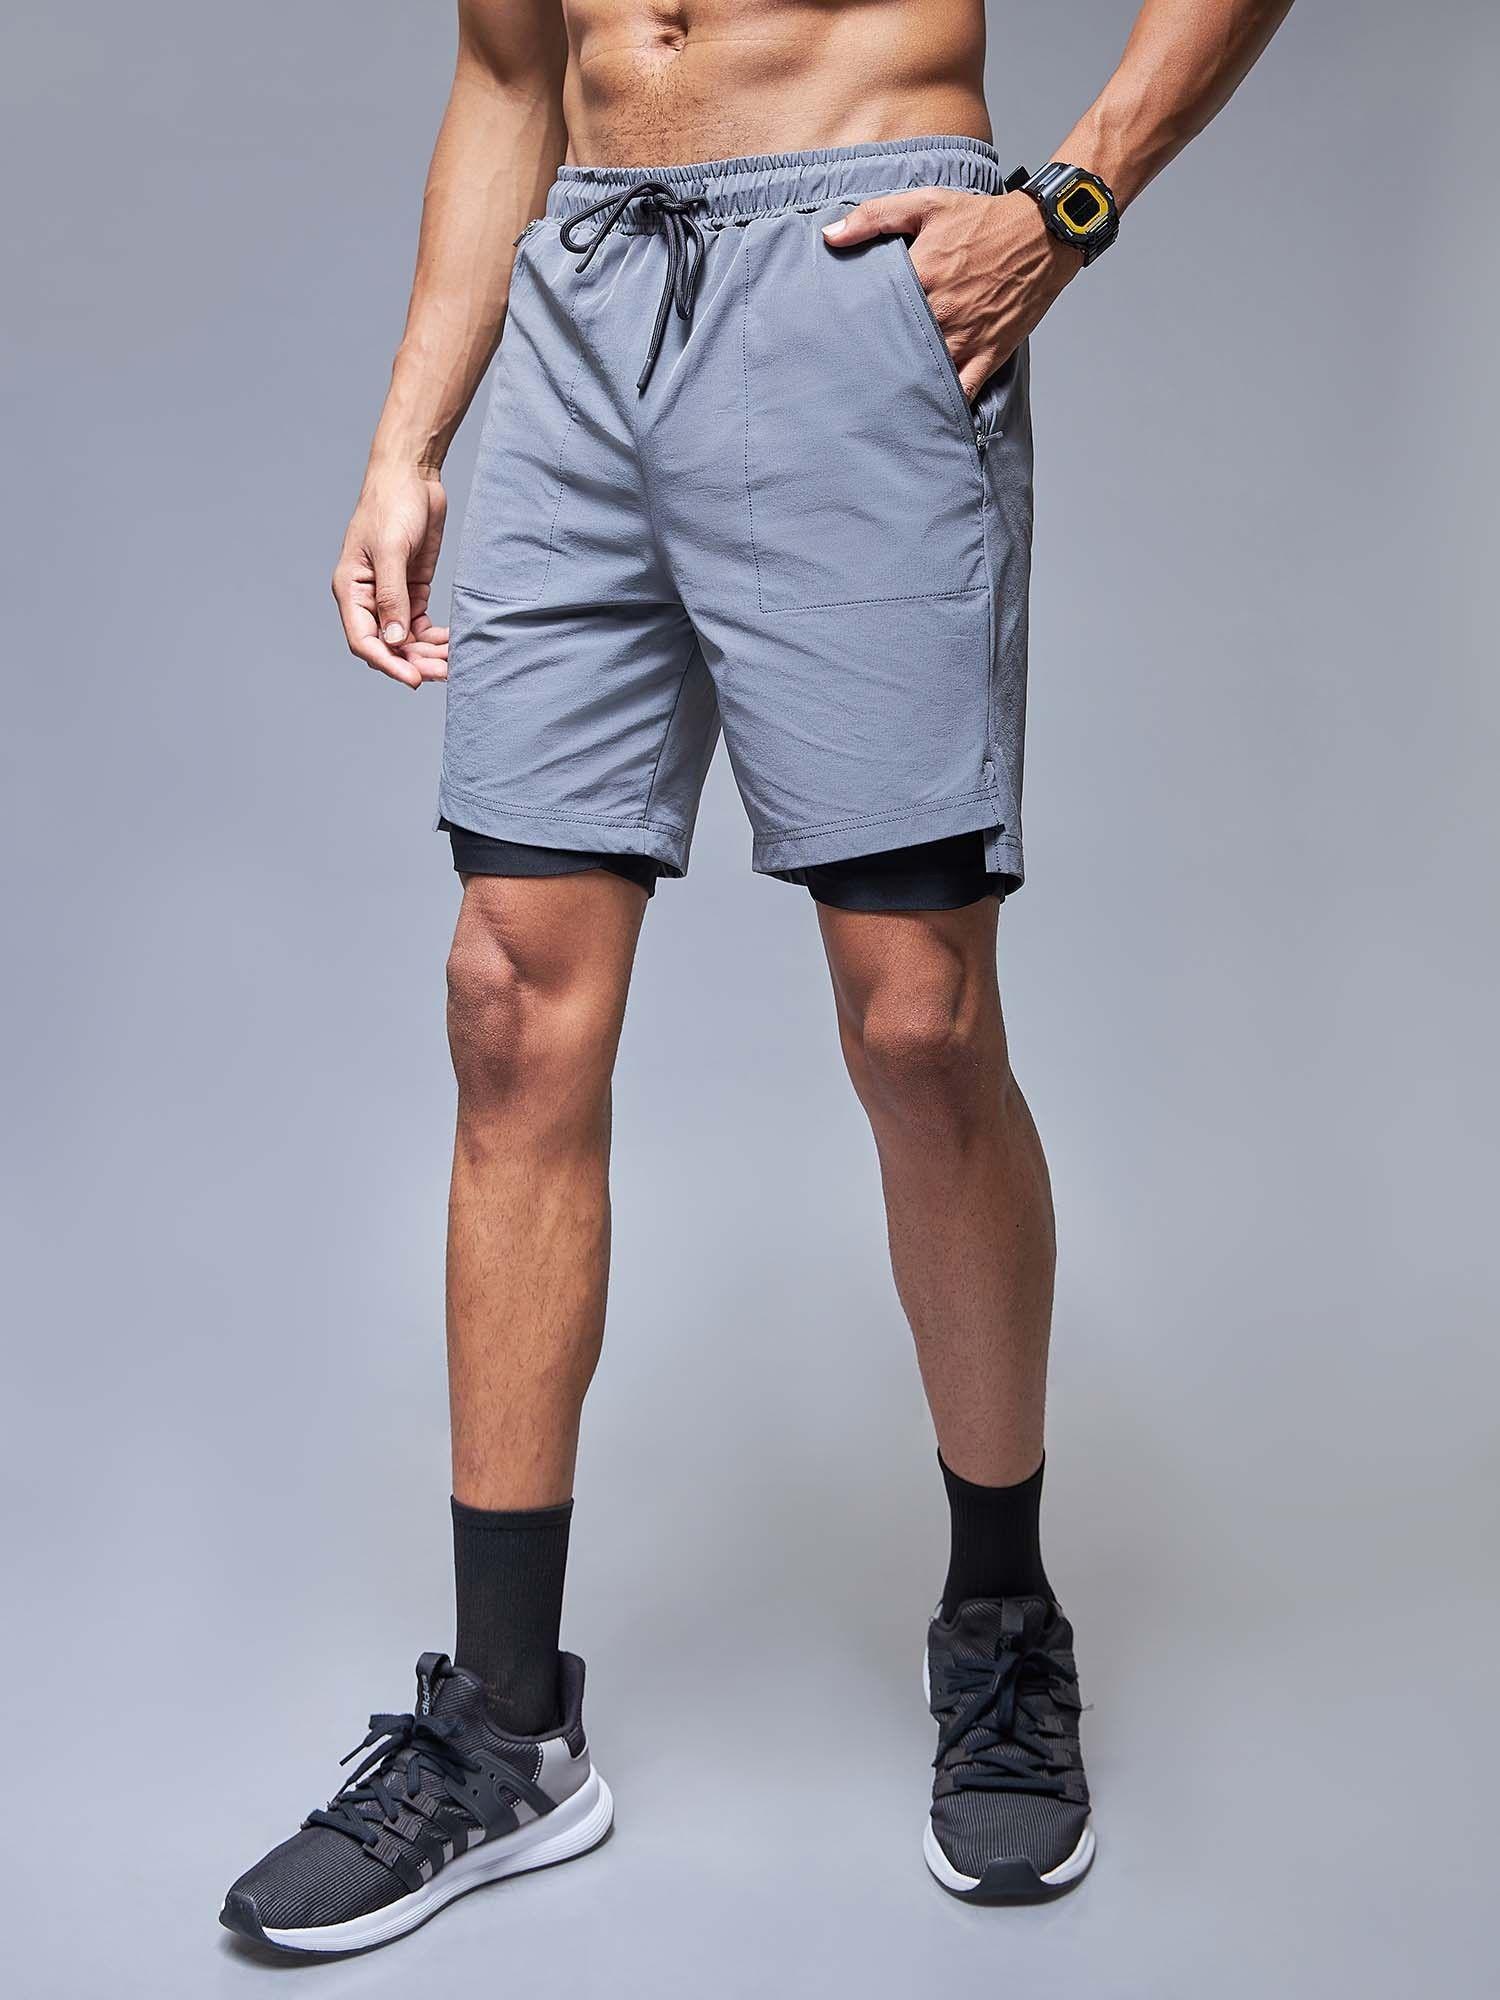 grey duoflex shorts